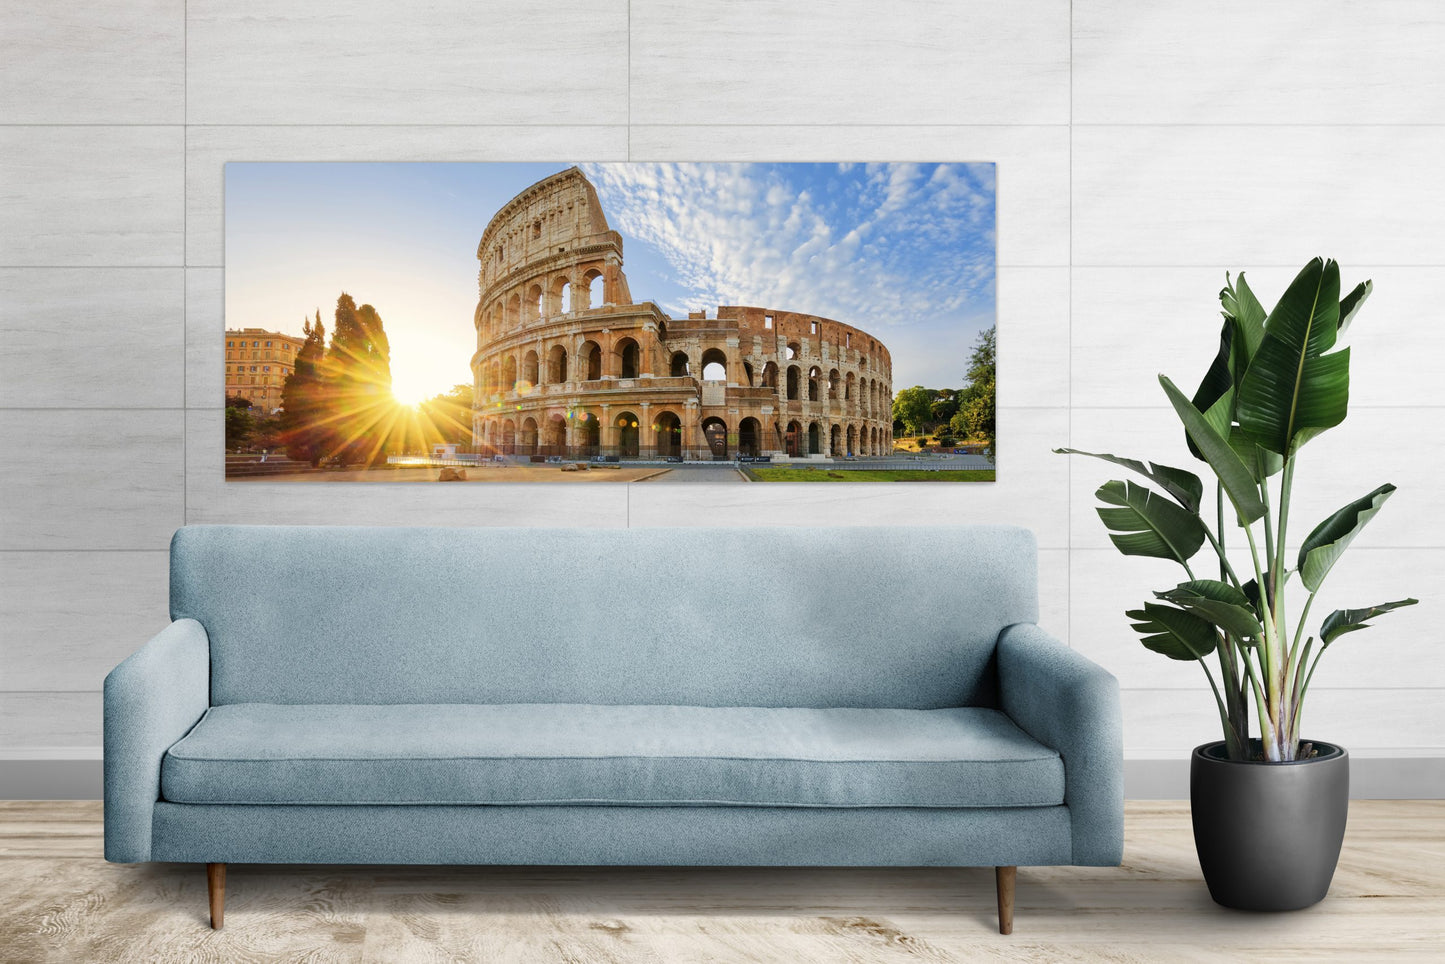 ROME Majestic Colosseum At Sunrise Wall Art Print